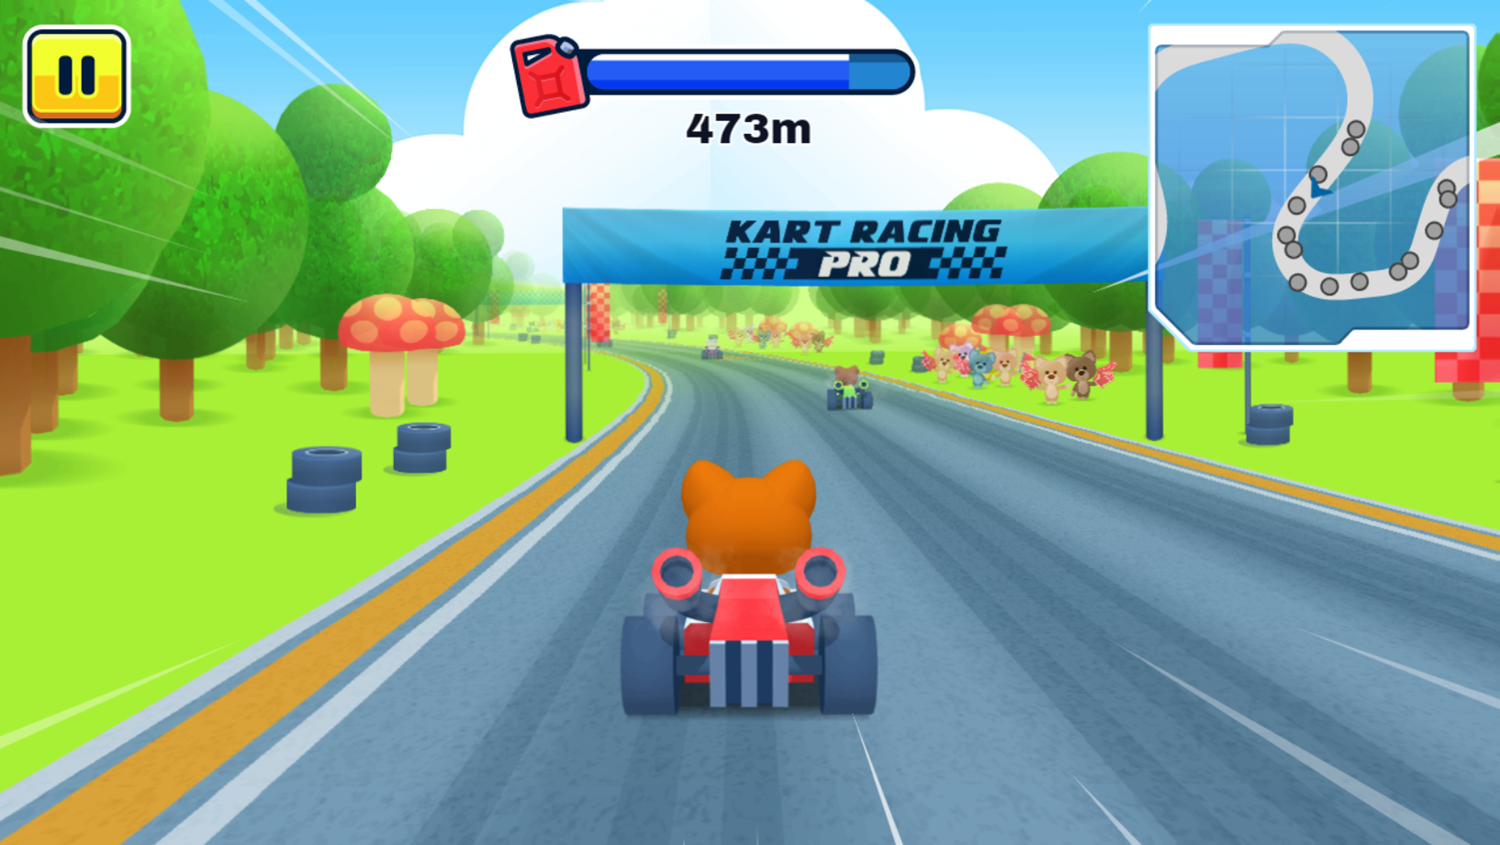 Kart Racing Pro Game Screenshot.